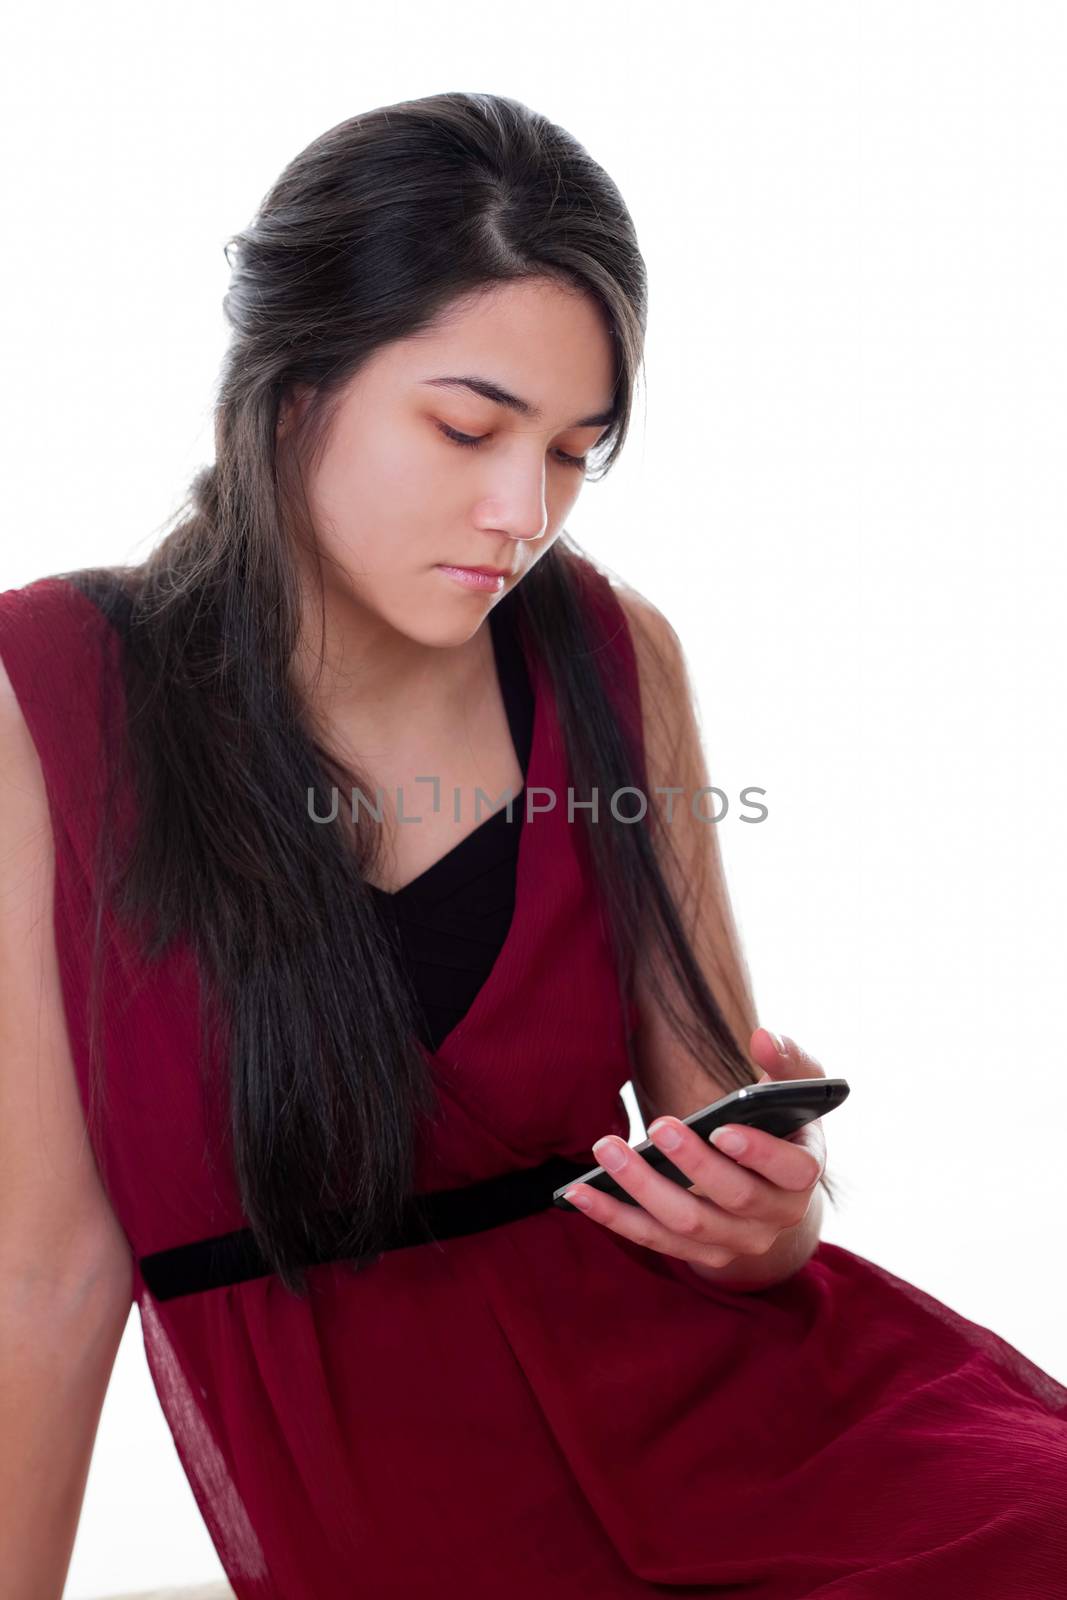 Teen girl in red dress holding cellphone by jarenwicklund